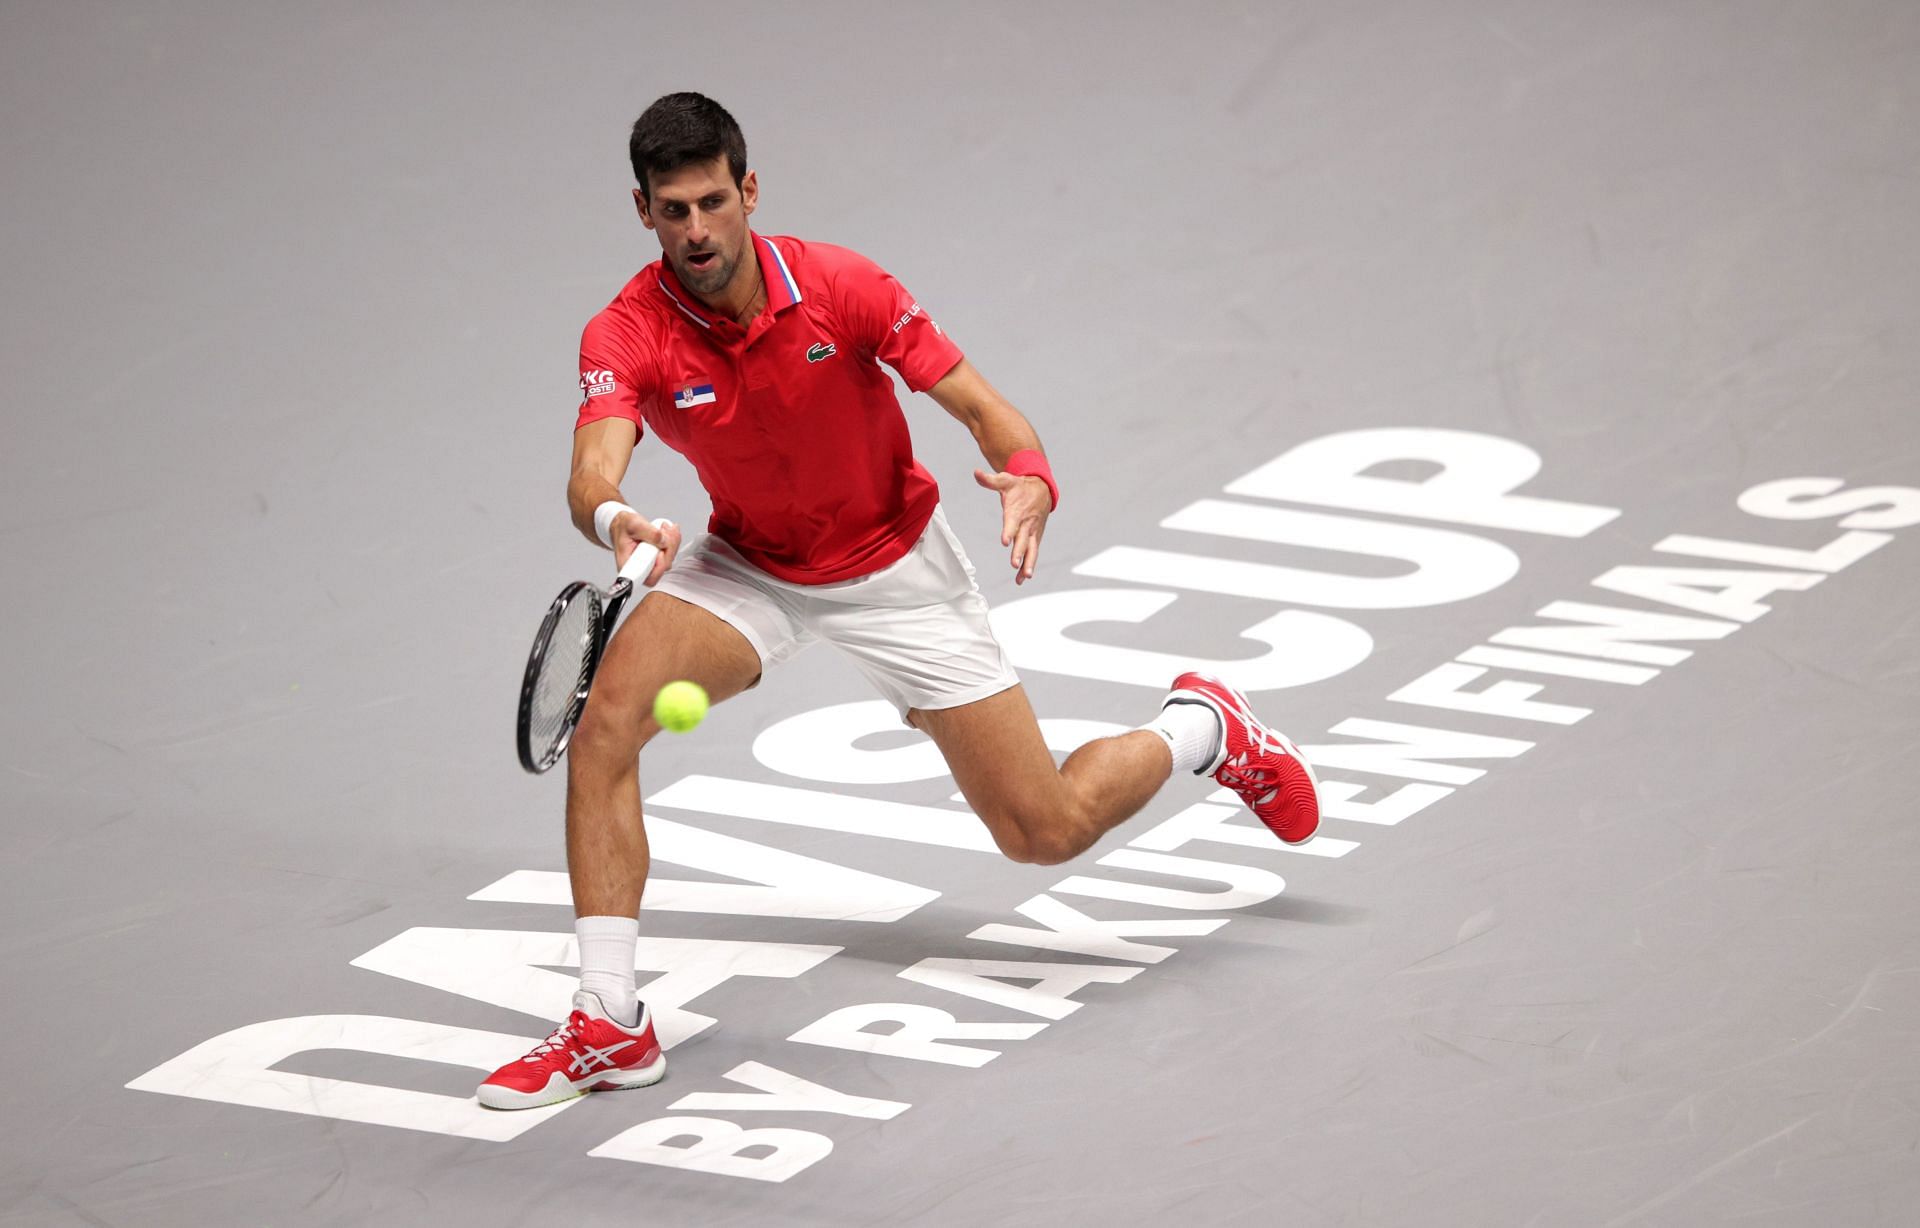 Novak Djokovic in action at the Davis Cup Finals 2021